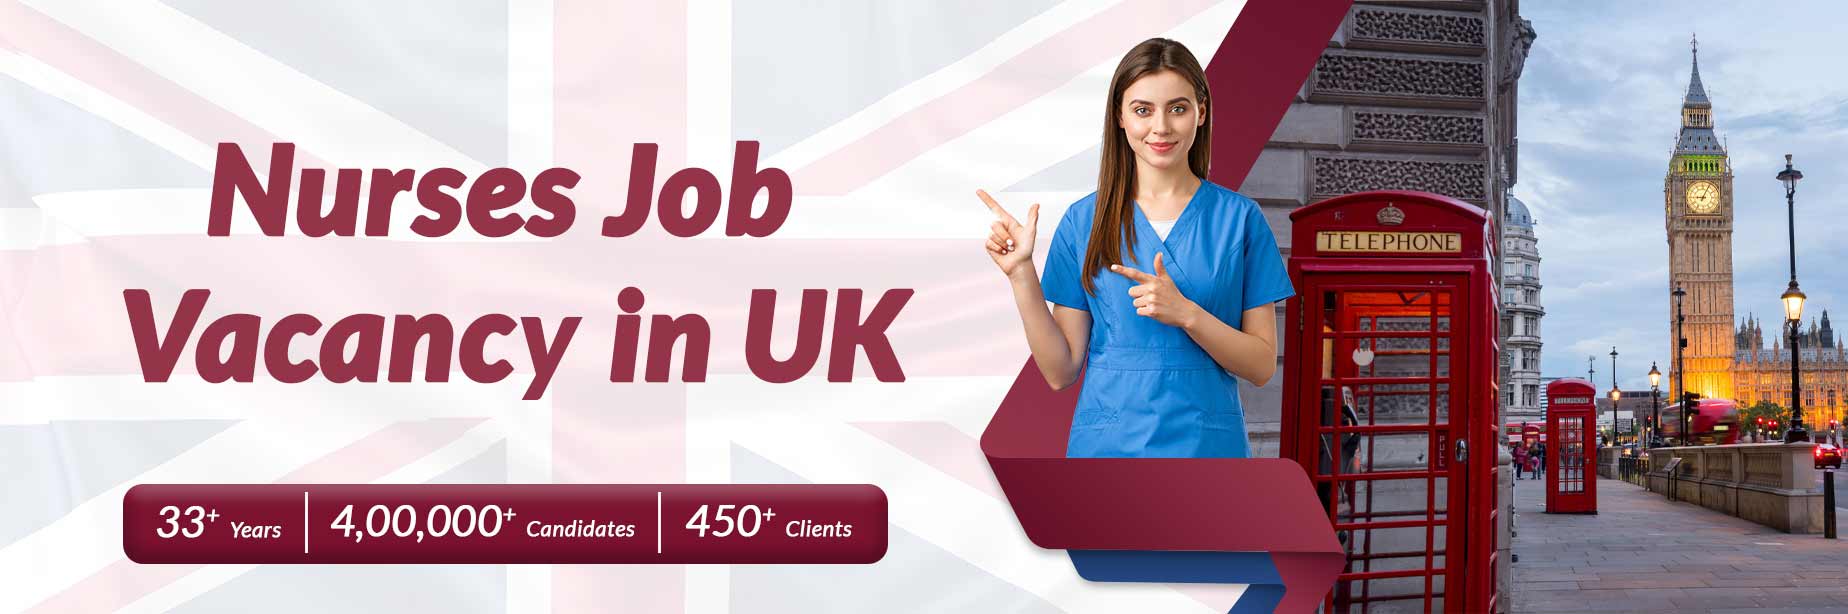 Nurses Job Vacancy in UK